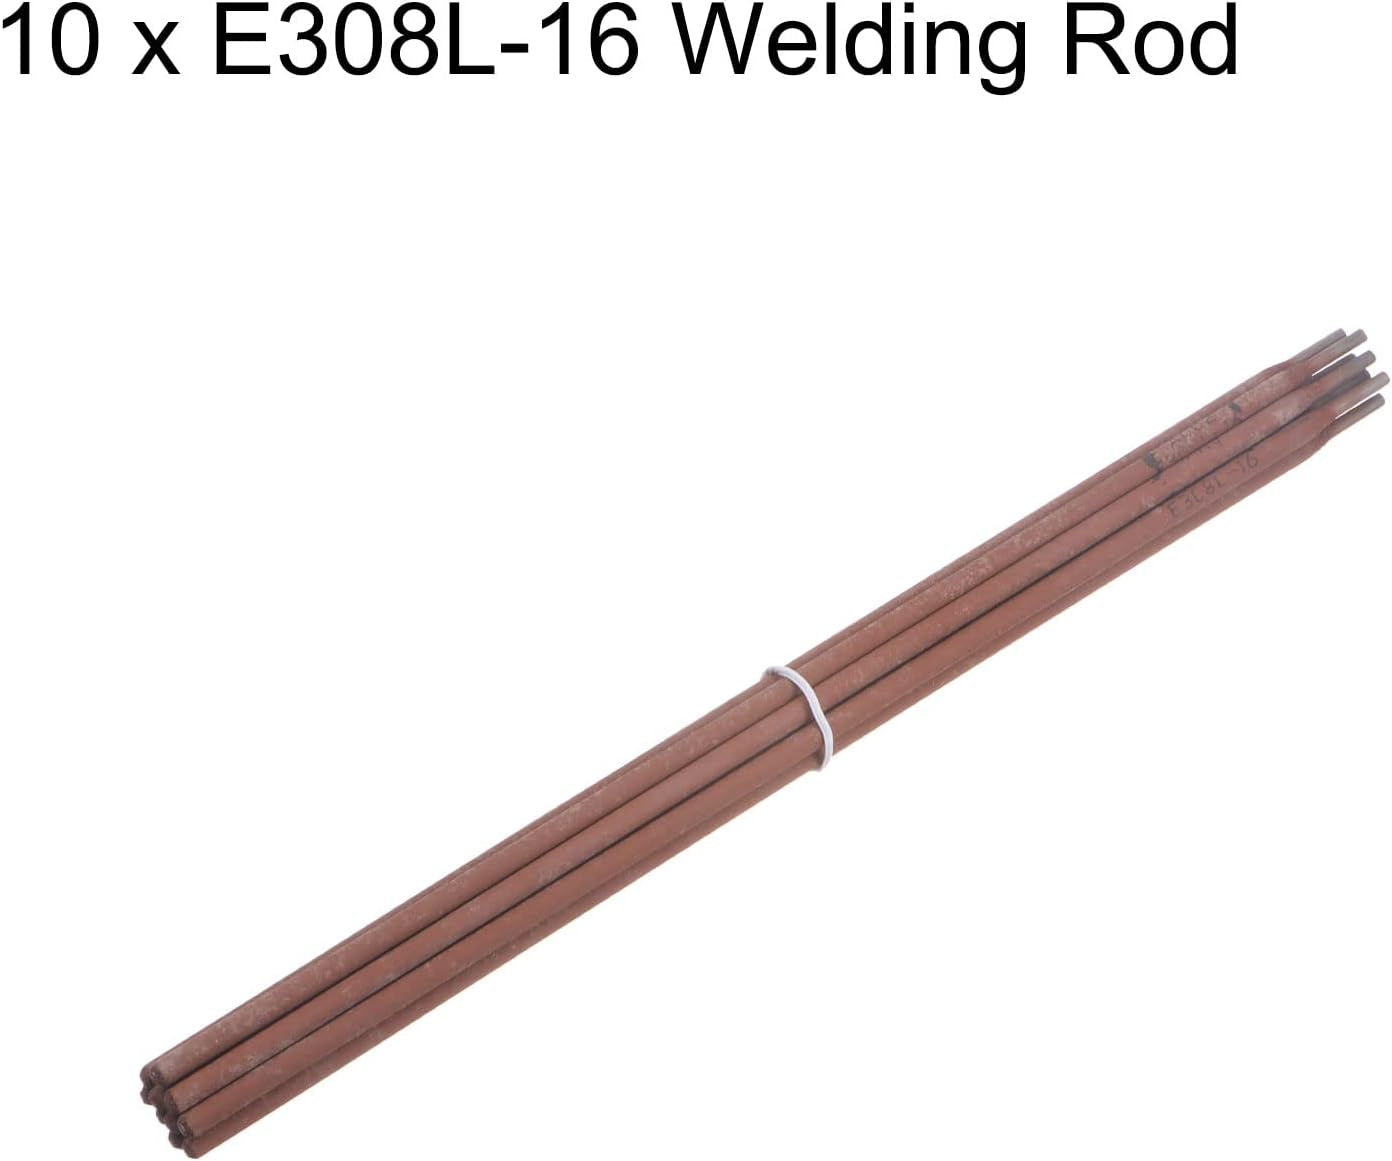 E308L-16 Welding Rod 1/8" X 12" 308 Stainless Steel Welding Rod A102 Electrodes Solder for Welding Stainless Steel Galvanized Steel 0.63 Lb